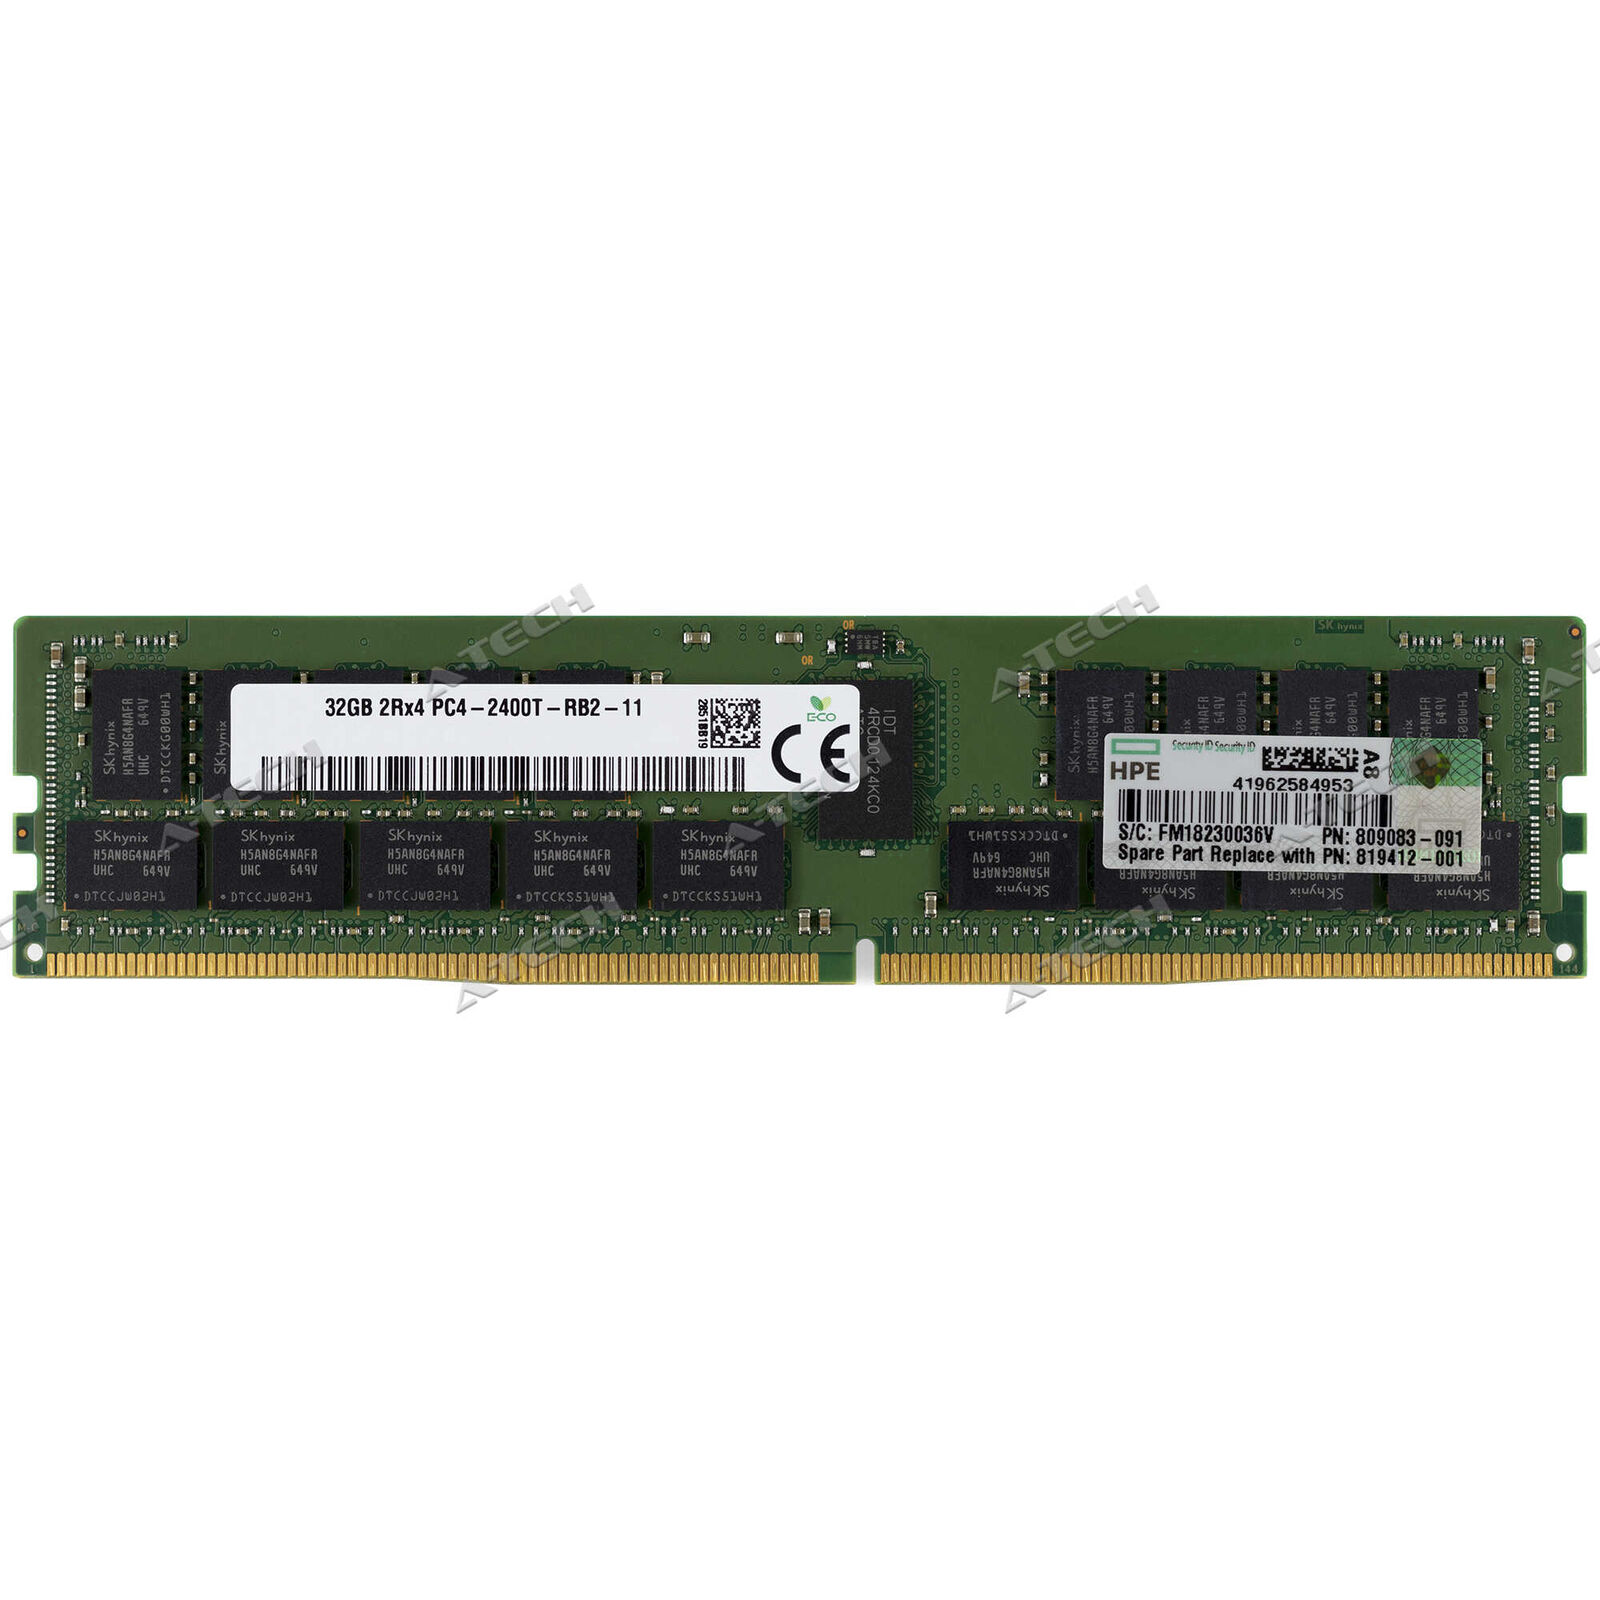 HP 32GB DDR4-2400 RDIMM 805351-B21 819412-001 809083-091 HPE Server Memory RAM